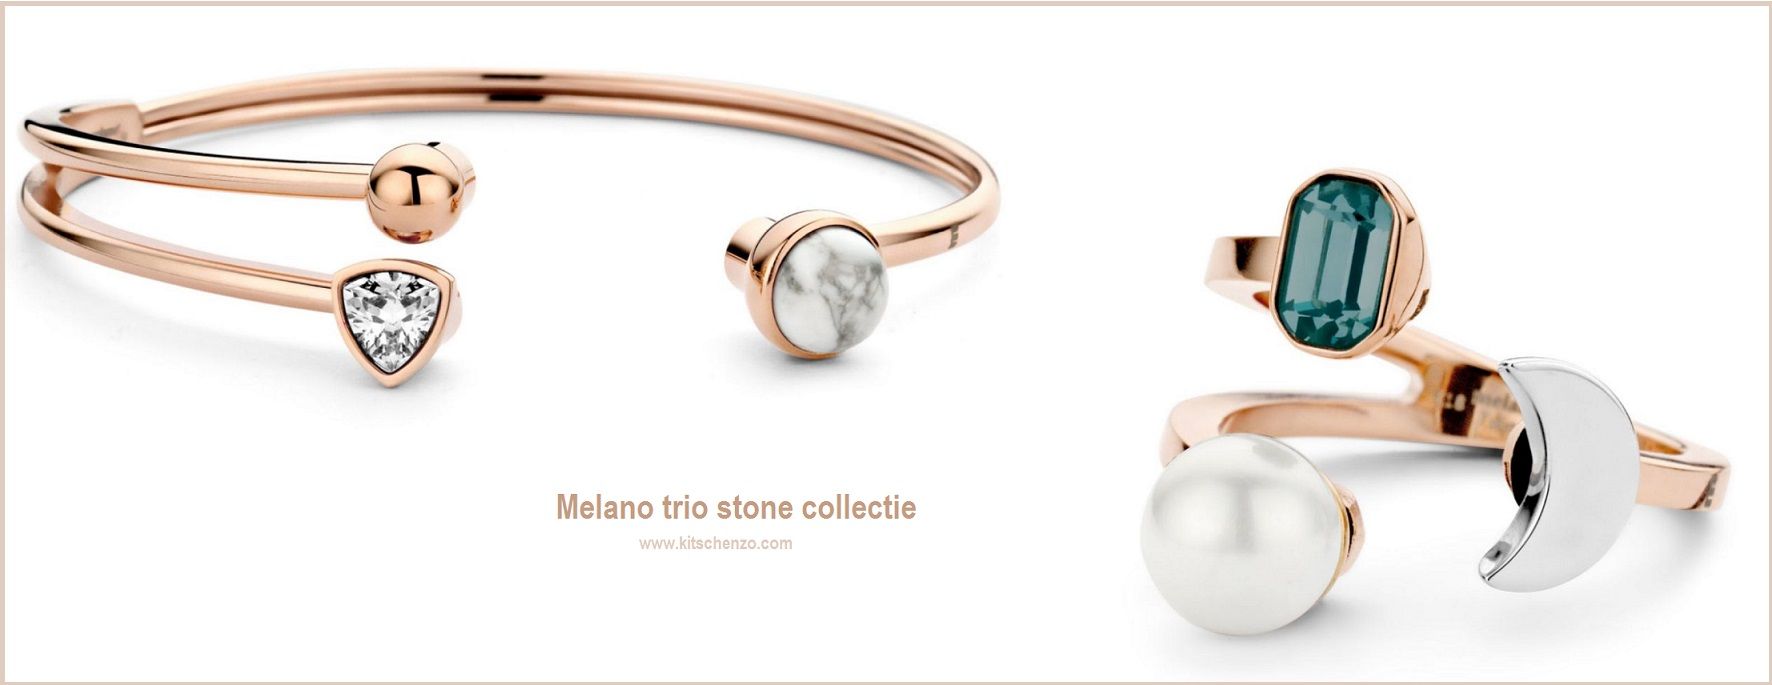 melano trio twisted collectie met verwisselbare stenen